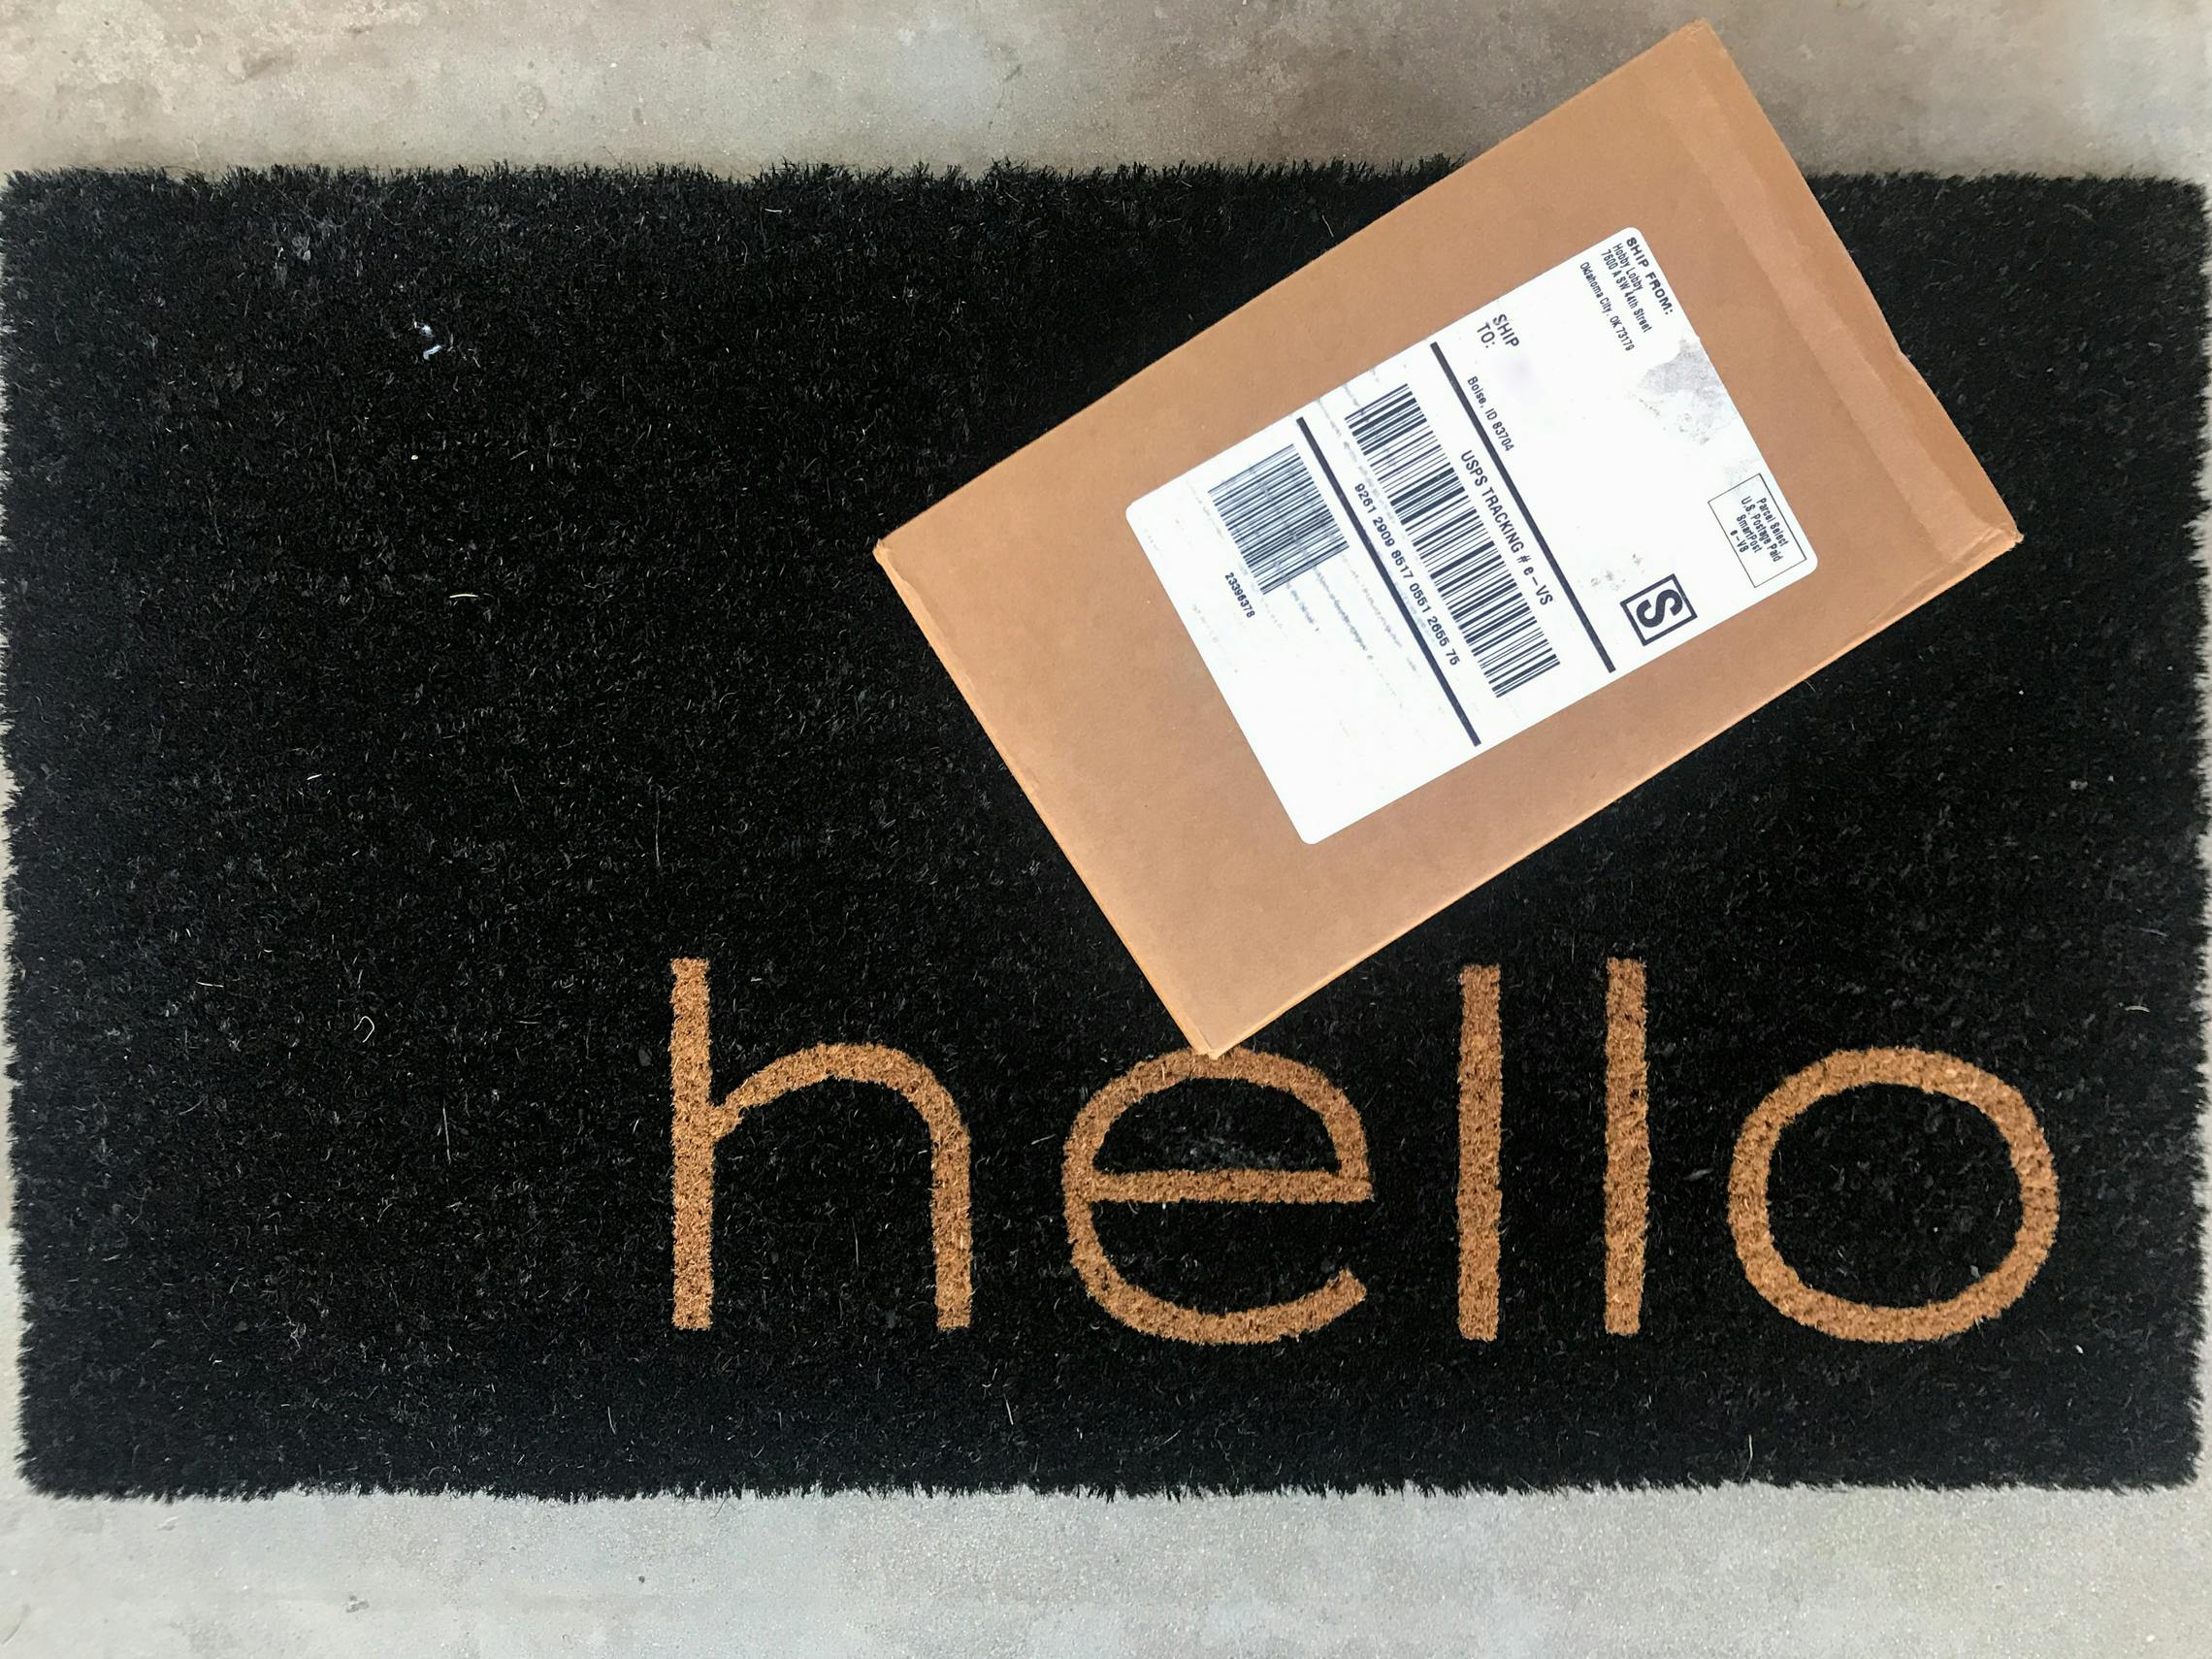 Hobby Lobby delivery box on black doorstep that say's "hello".